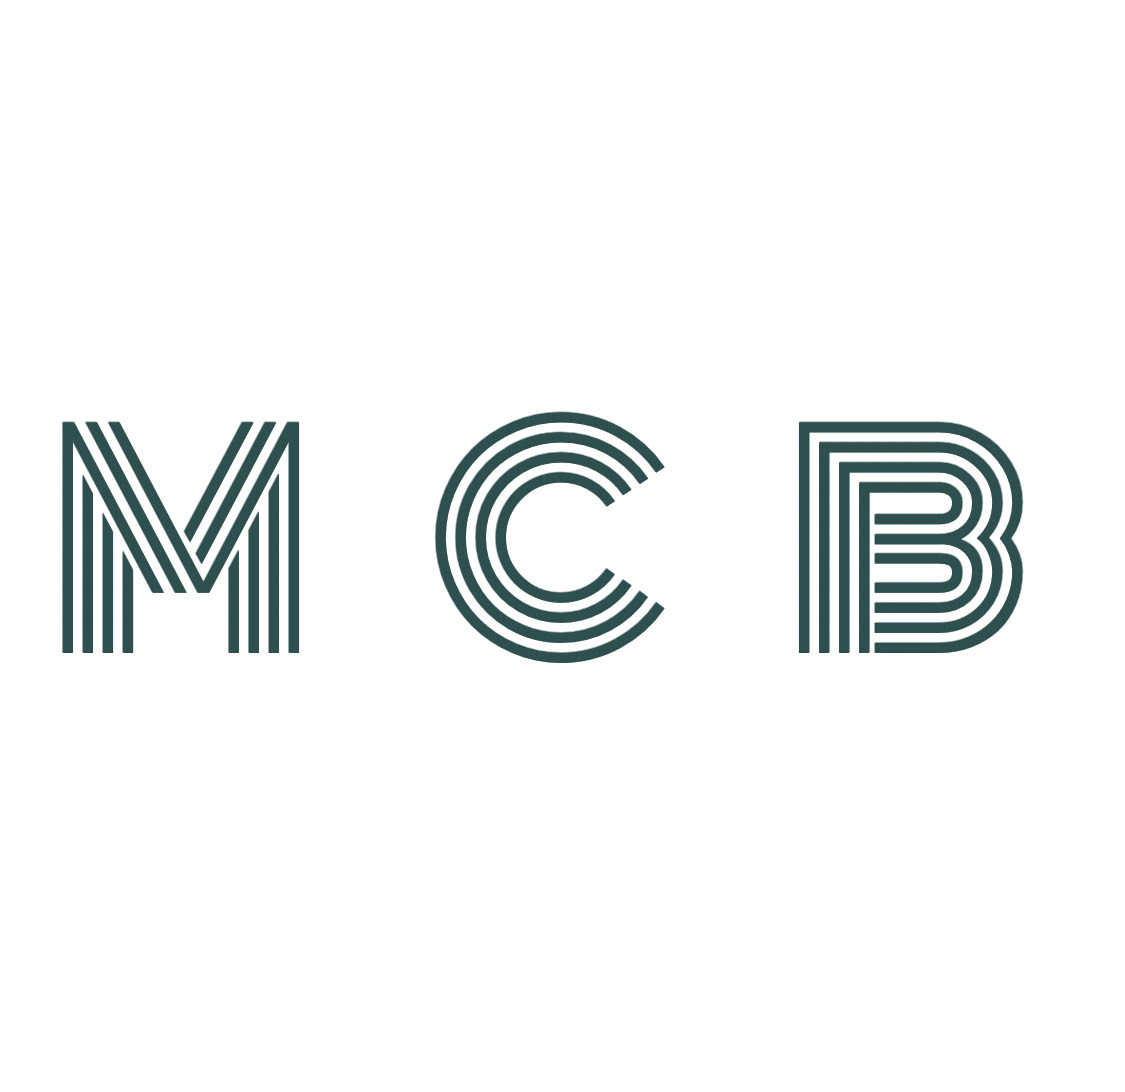 Meet Connect Build - MCB